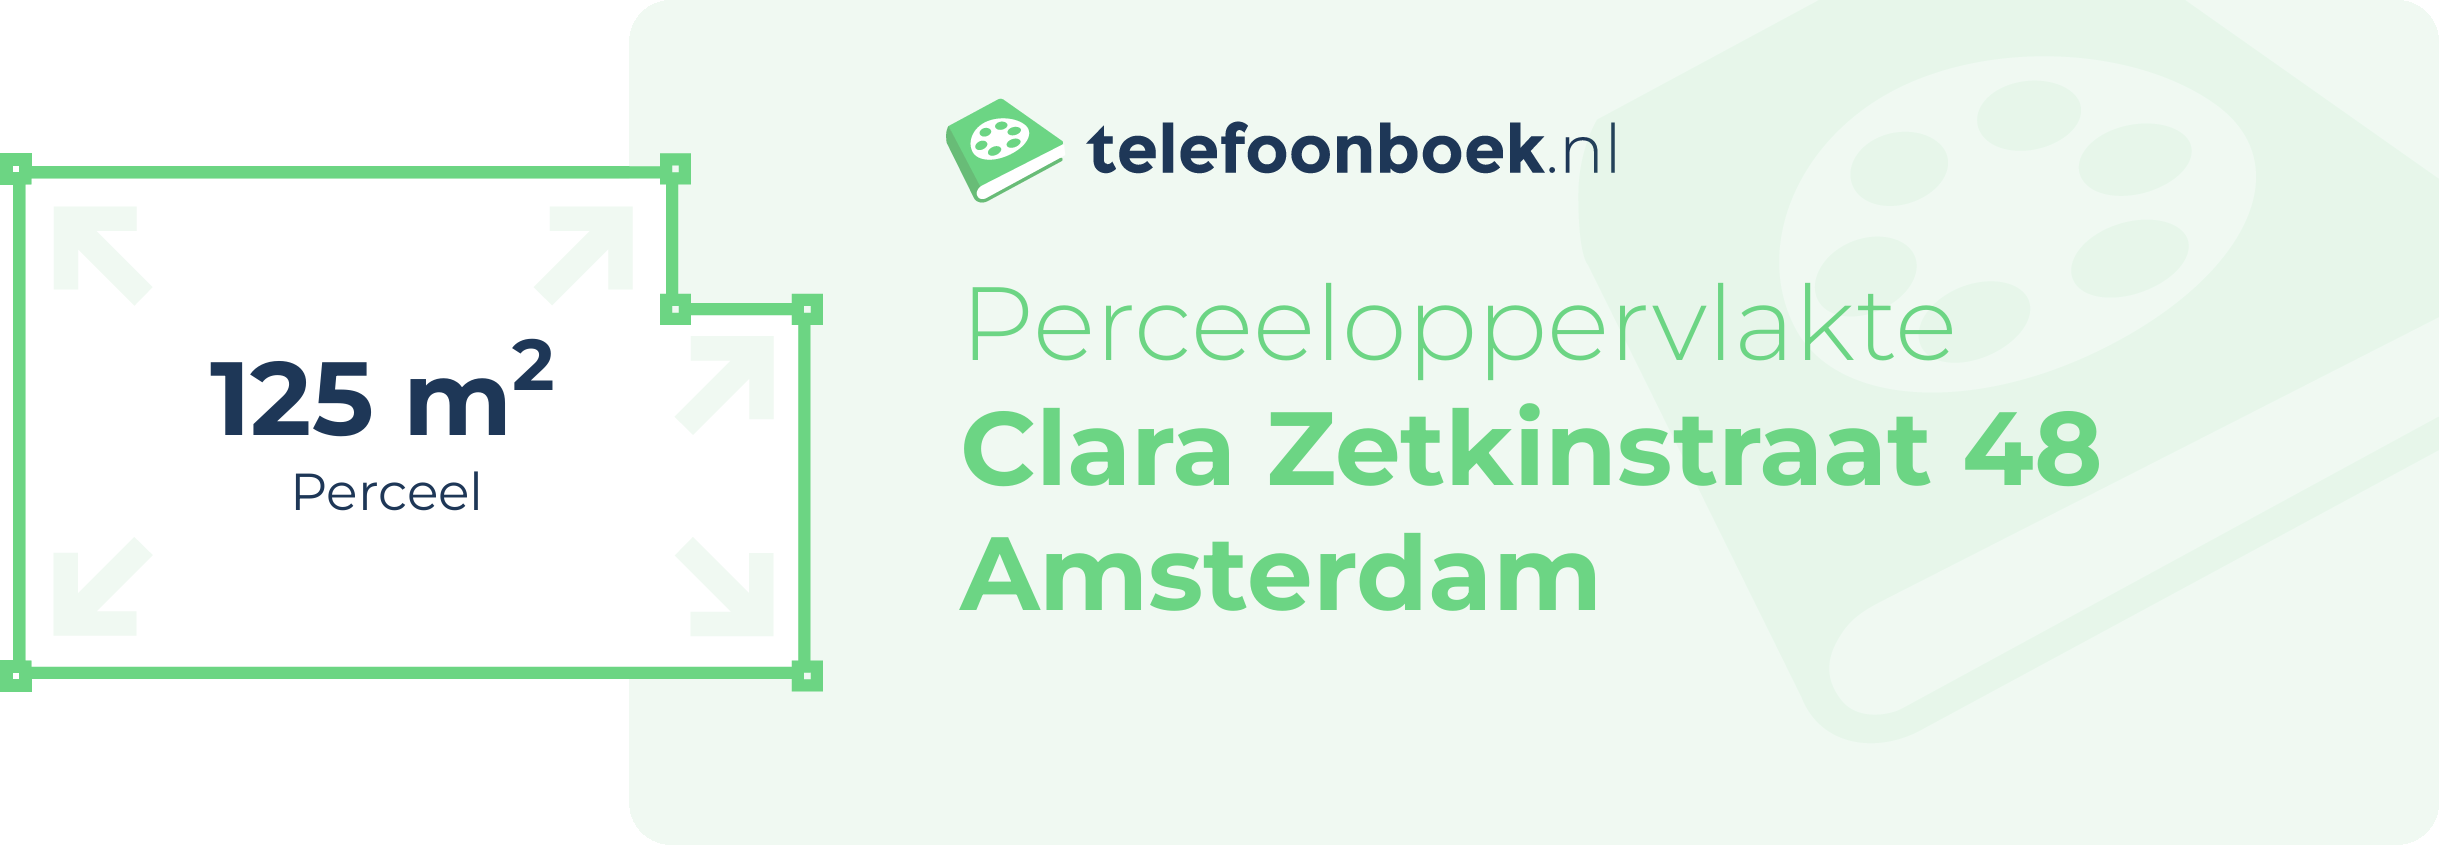 Perceeloppervlakte Clara Zetkinstraat 48 Amsterdam